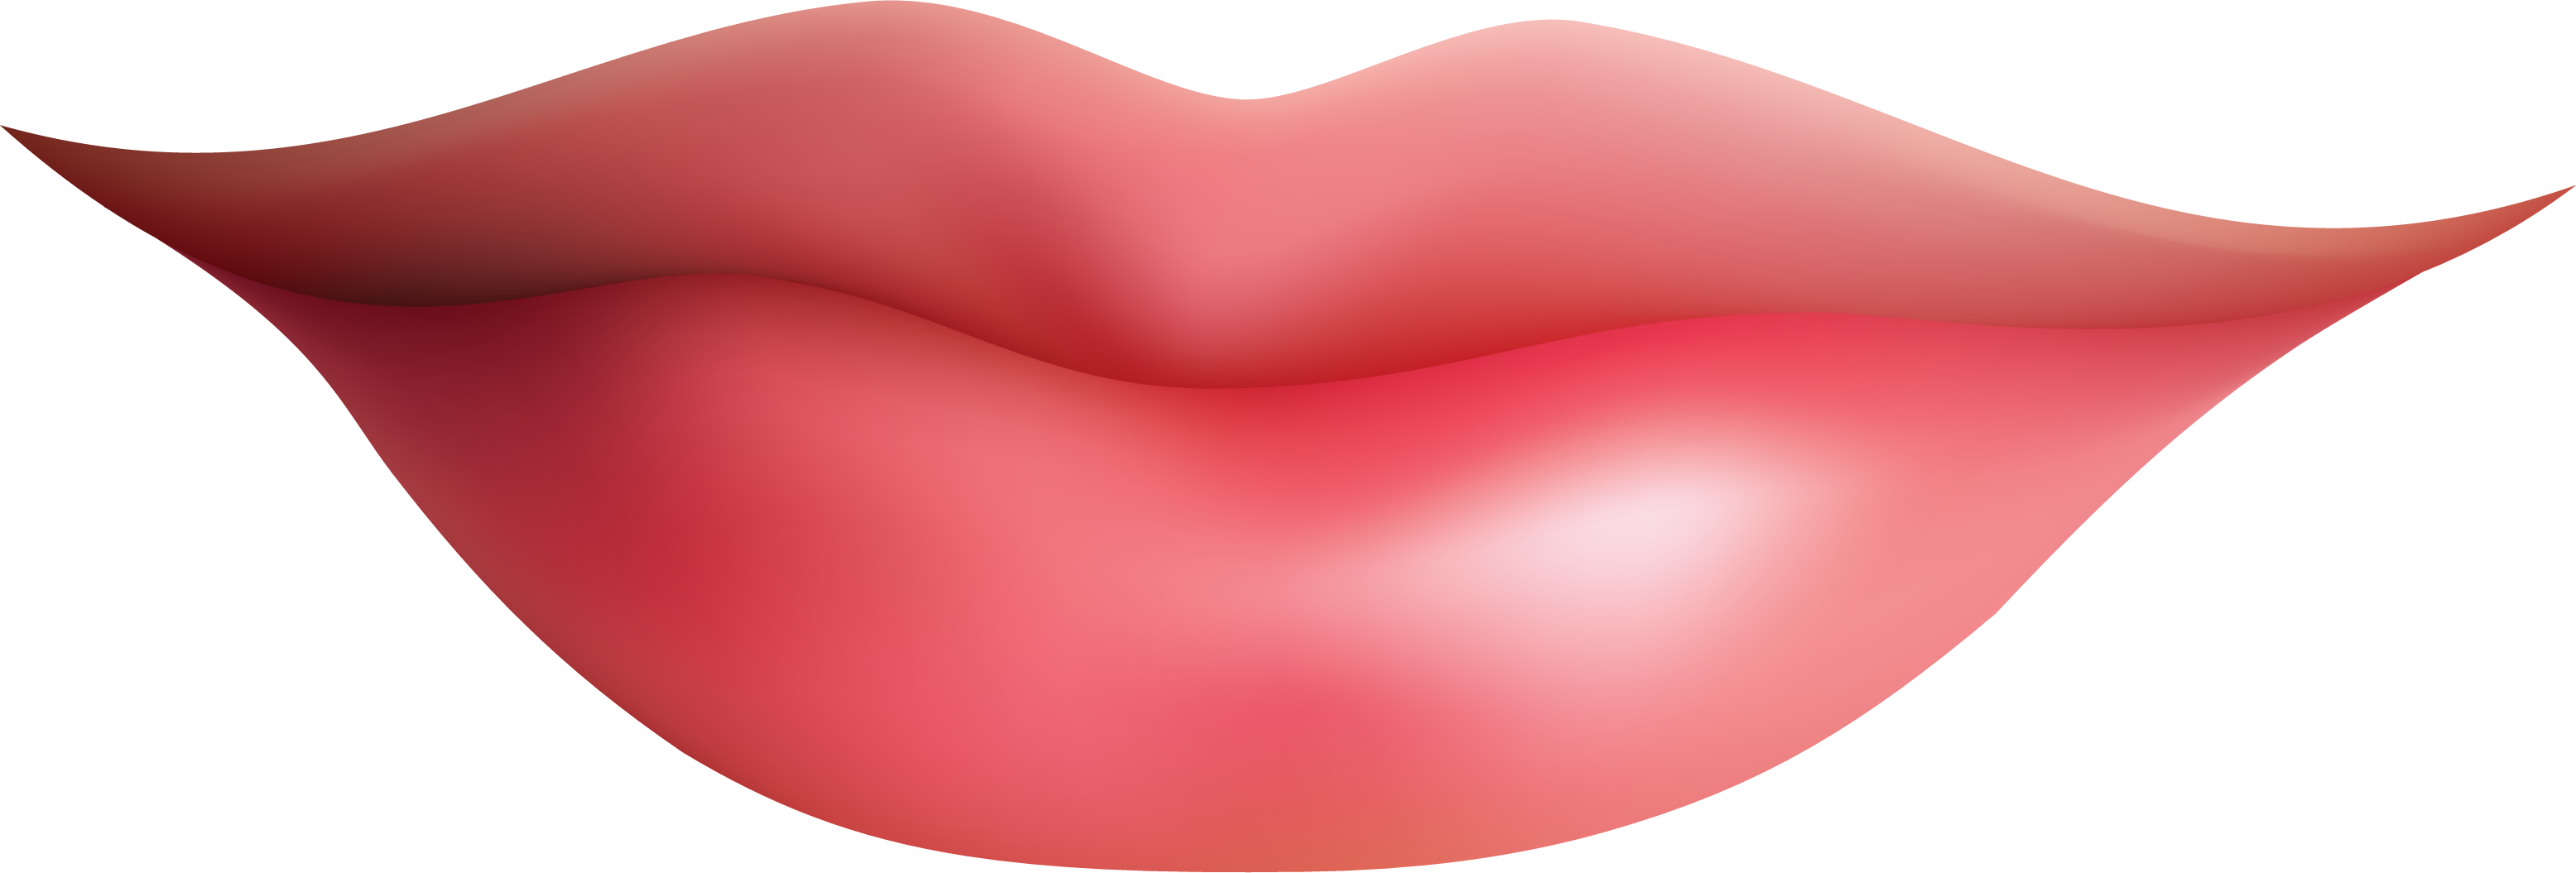 Lips image free download kiss